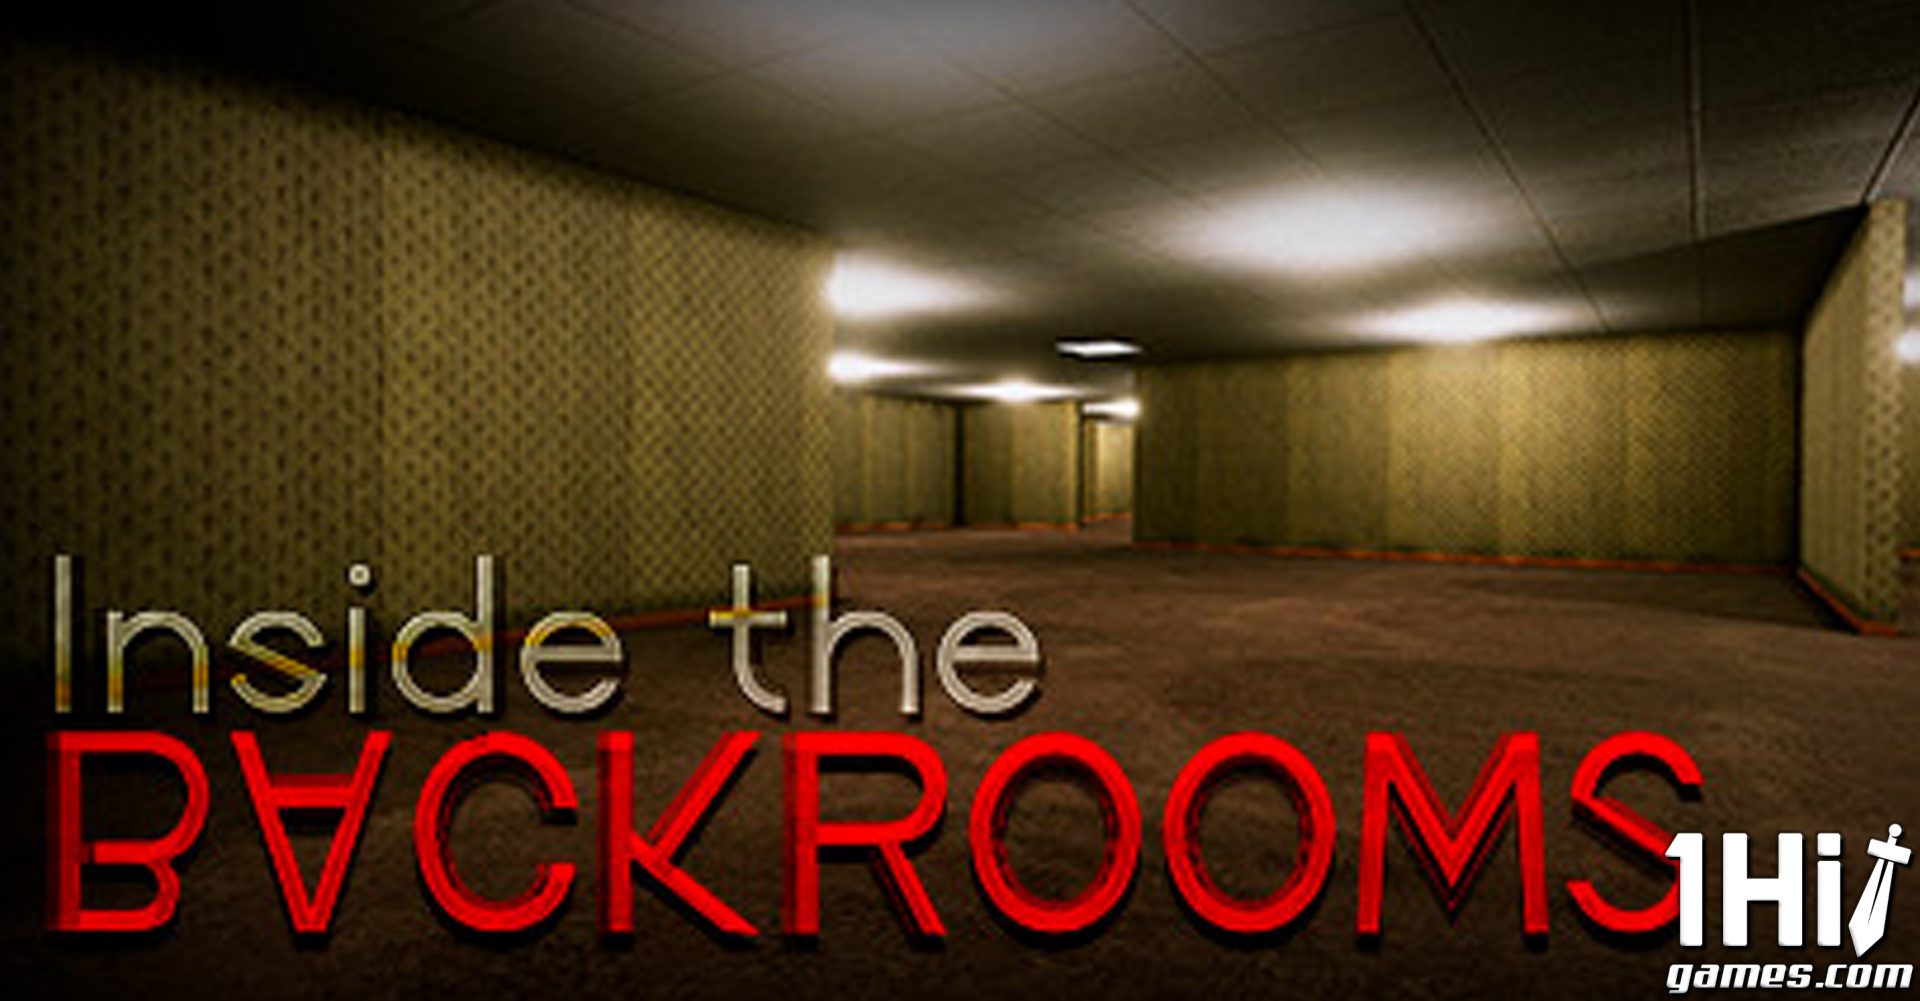 Inside the Backrooms